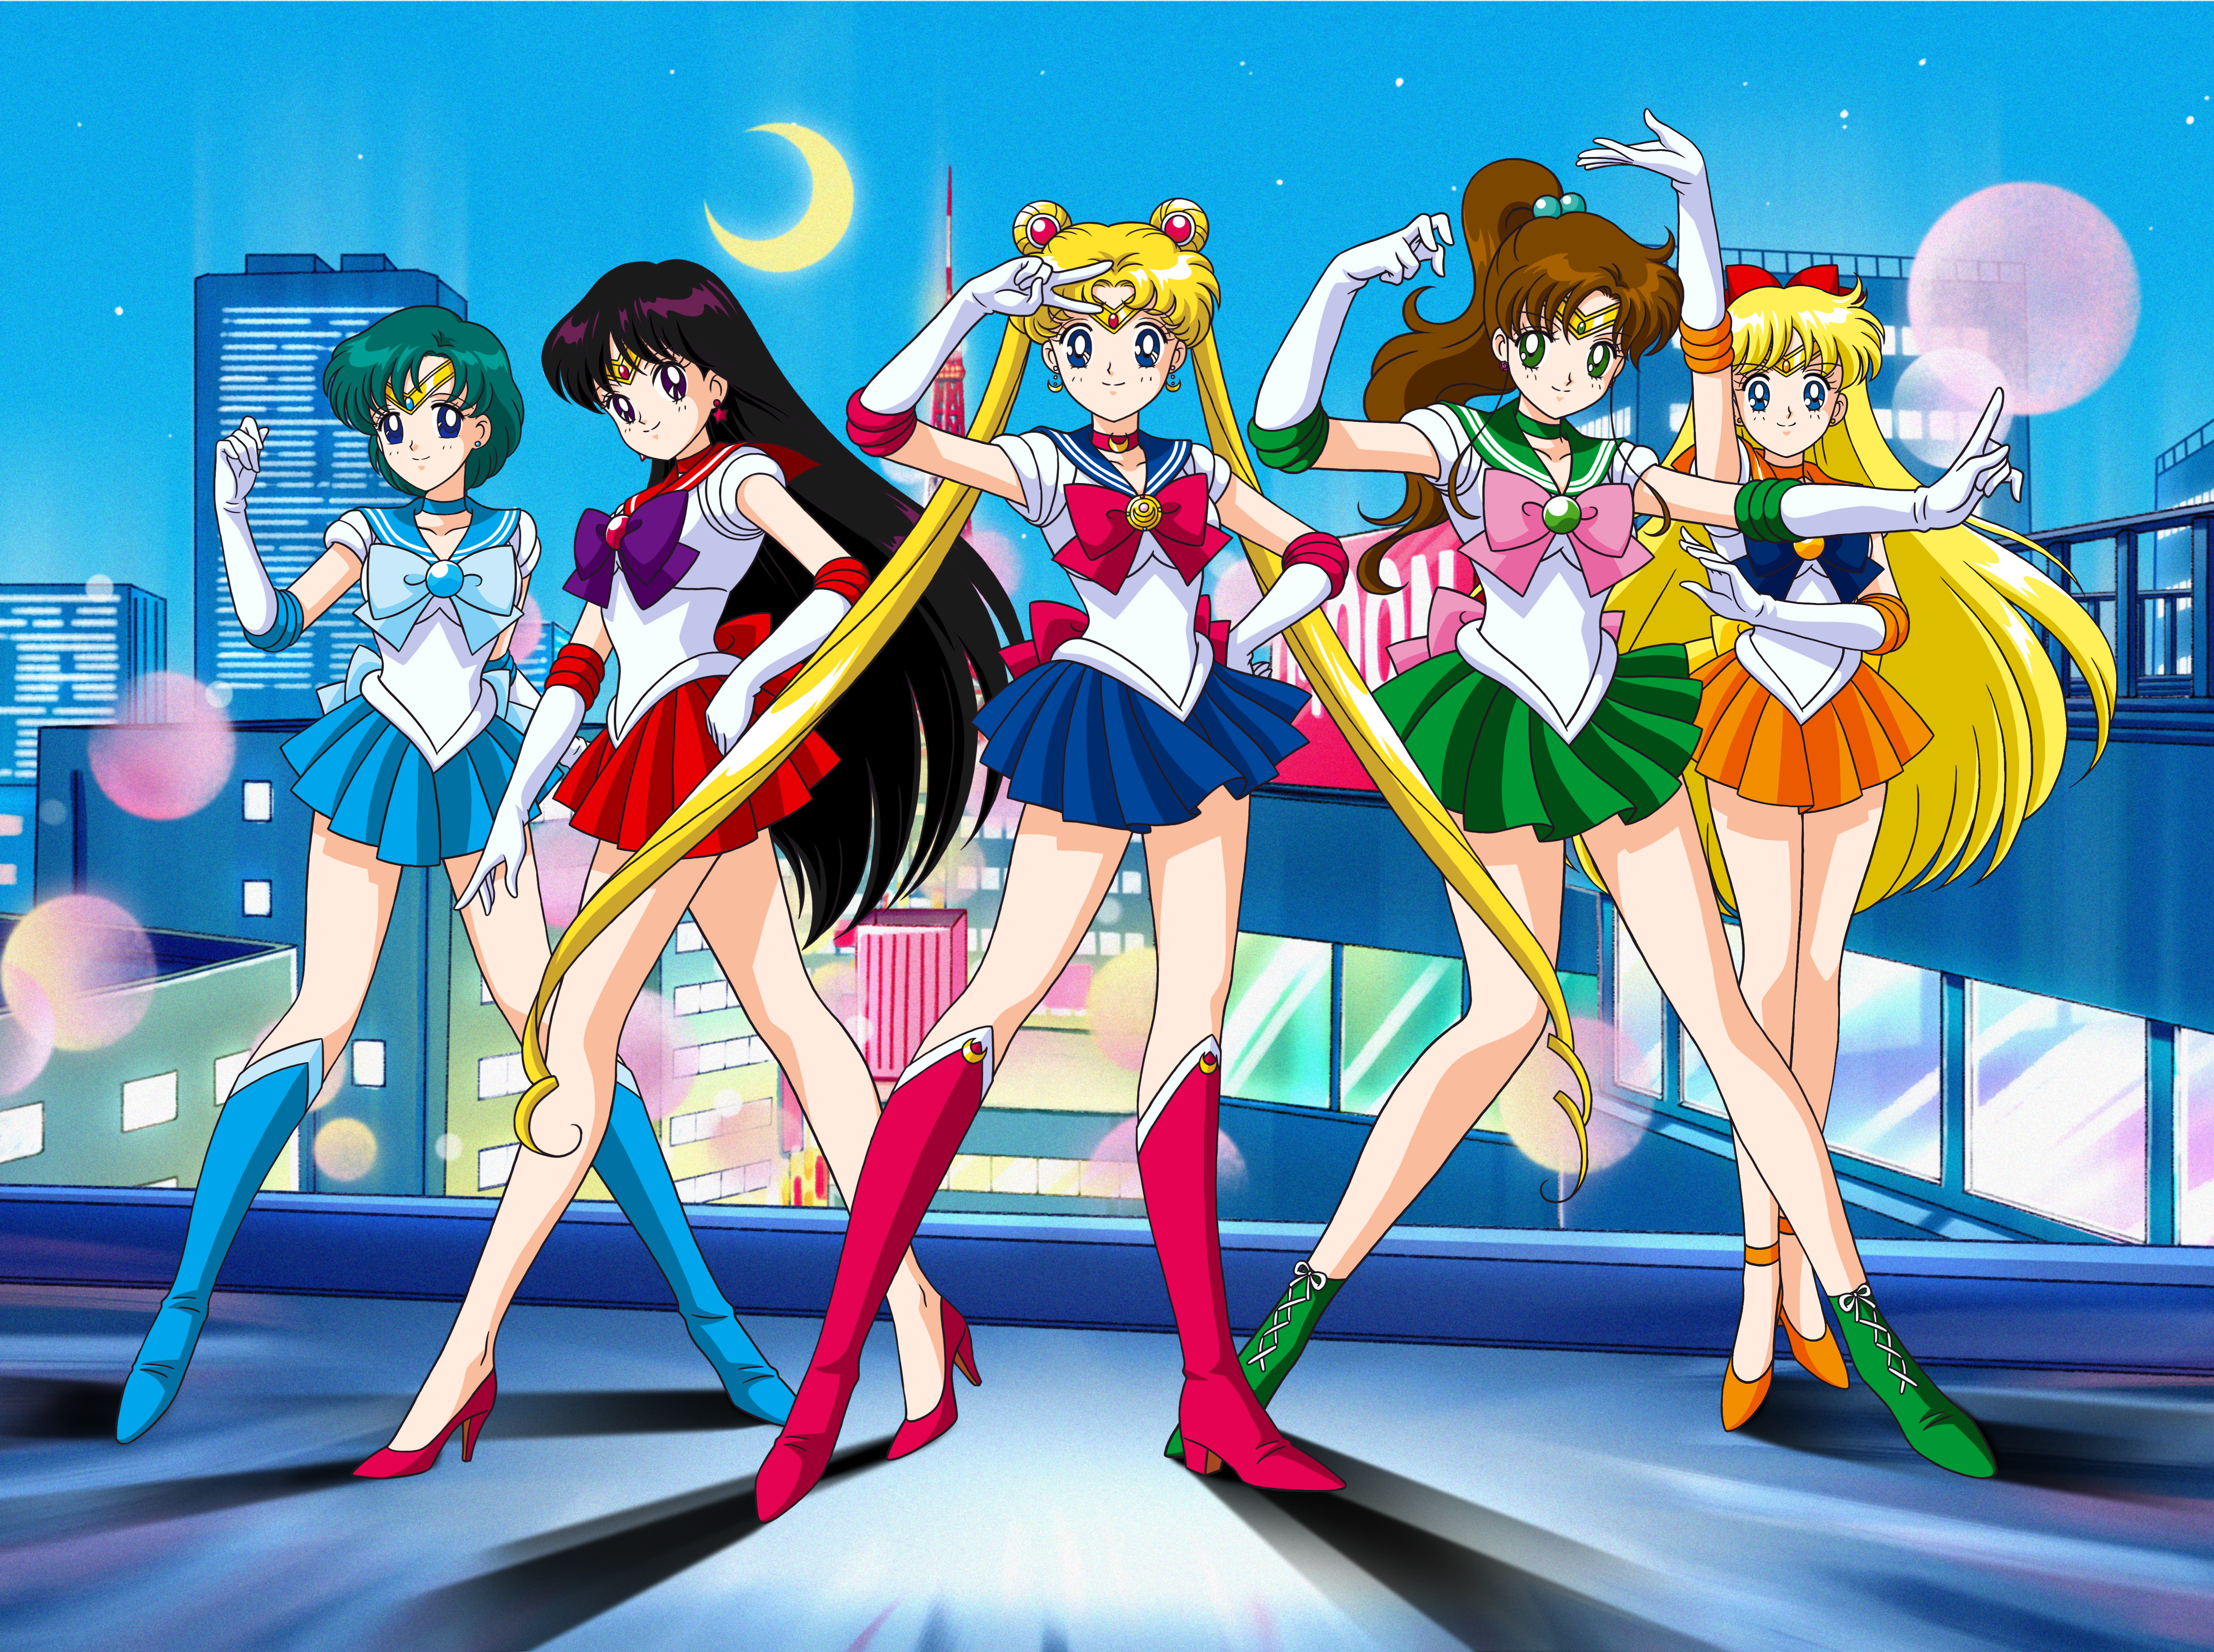 Best Sailor Moon Wallpaper Desktop in the world Learn more here 